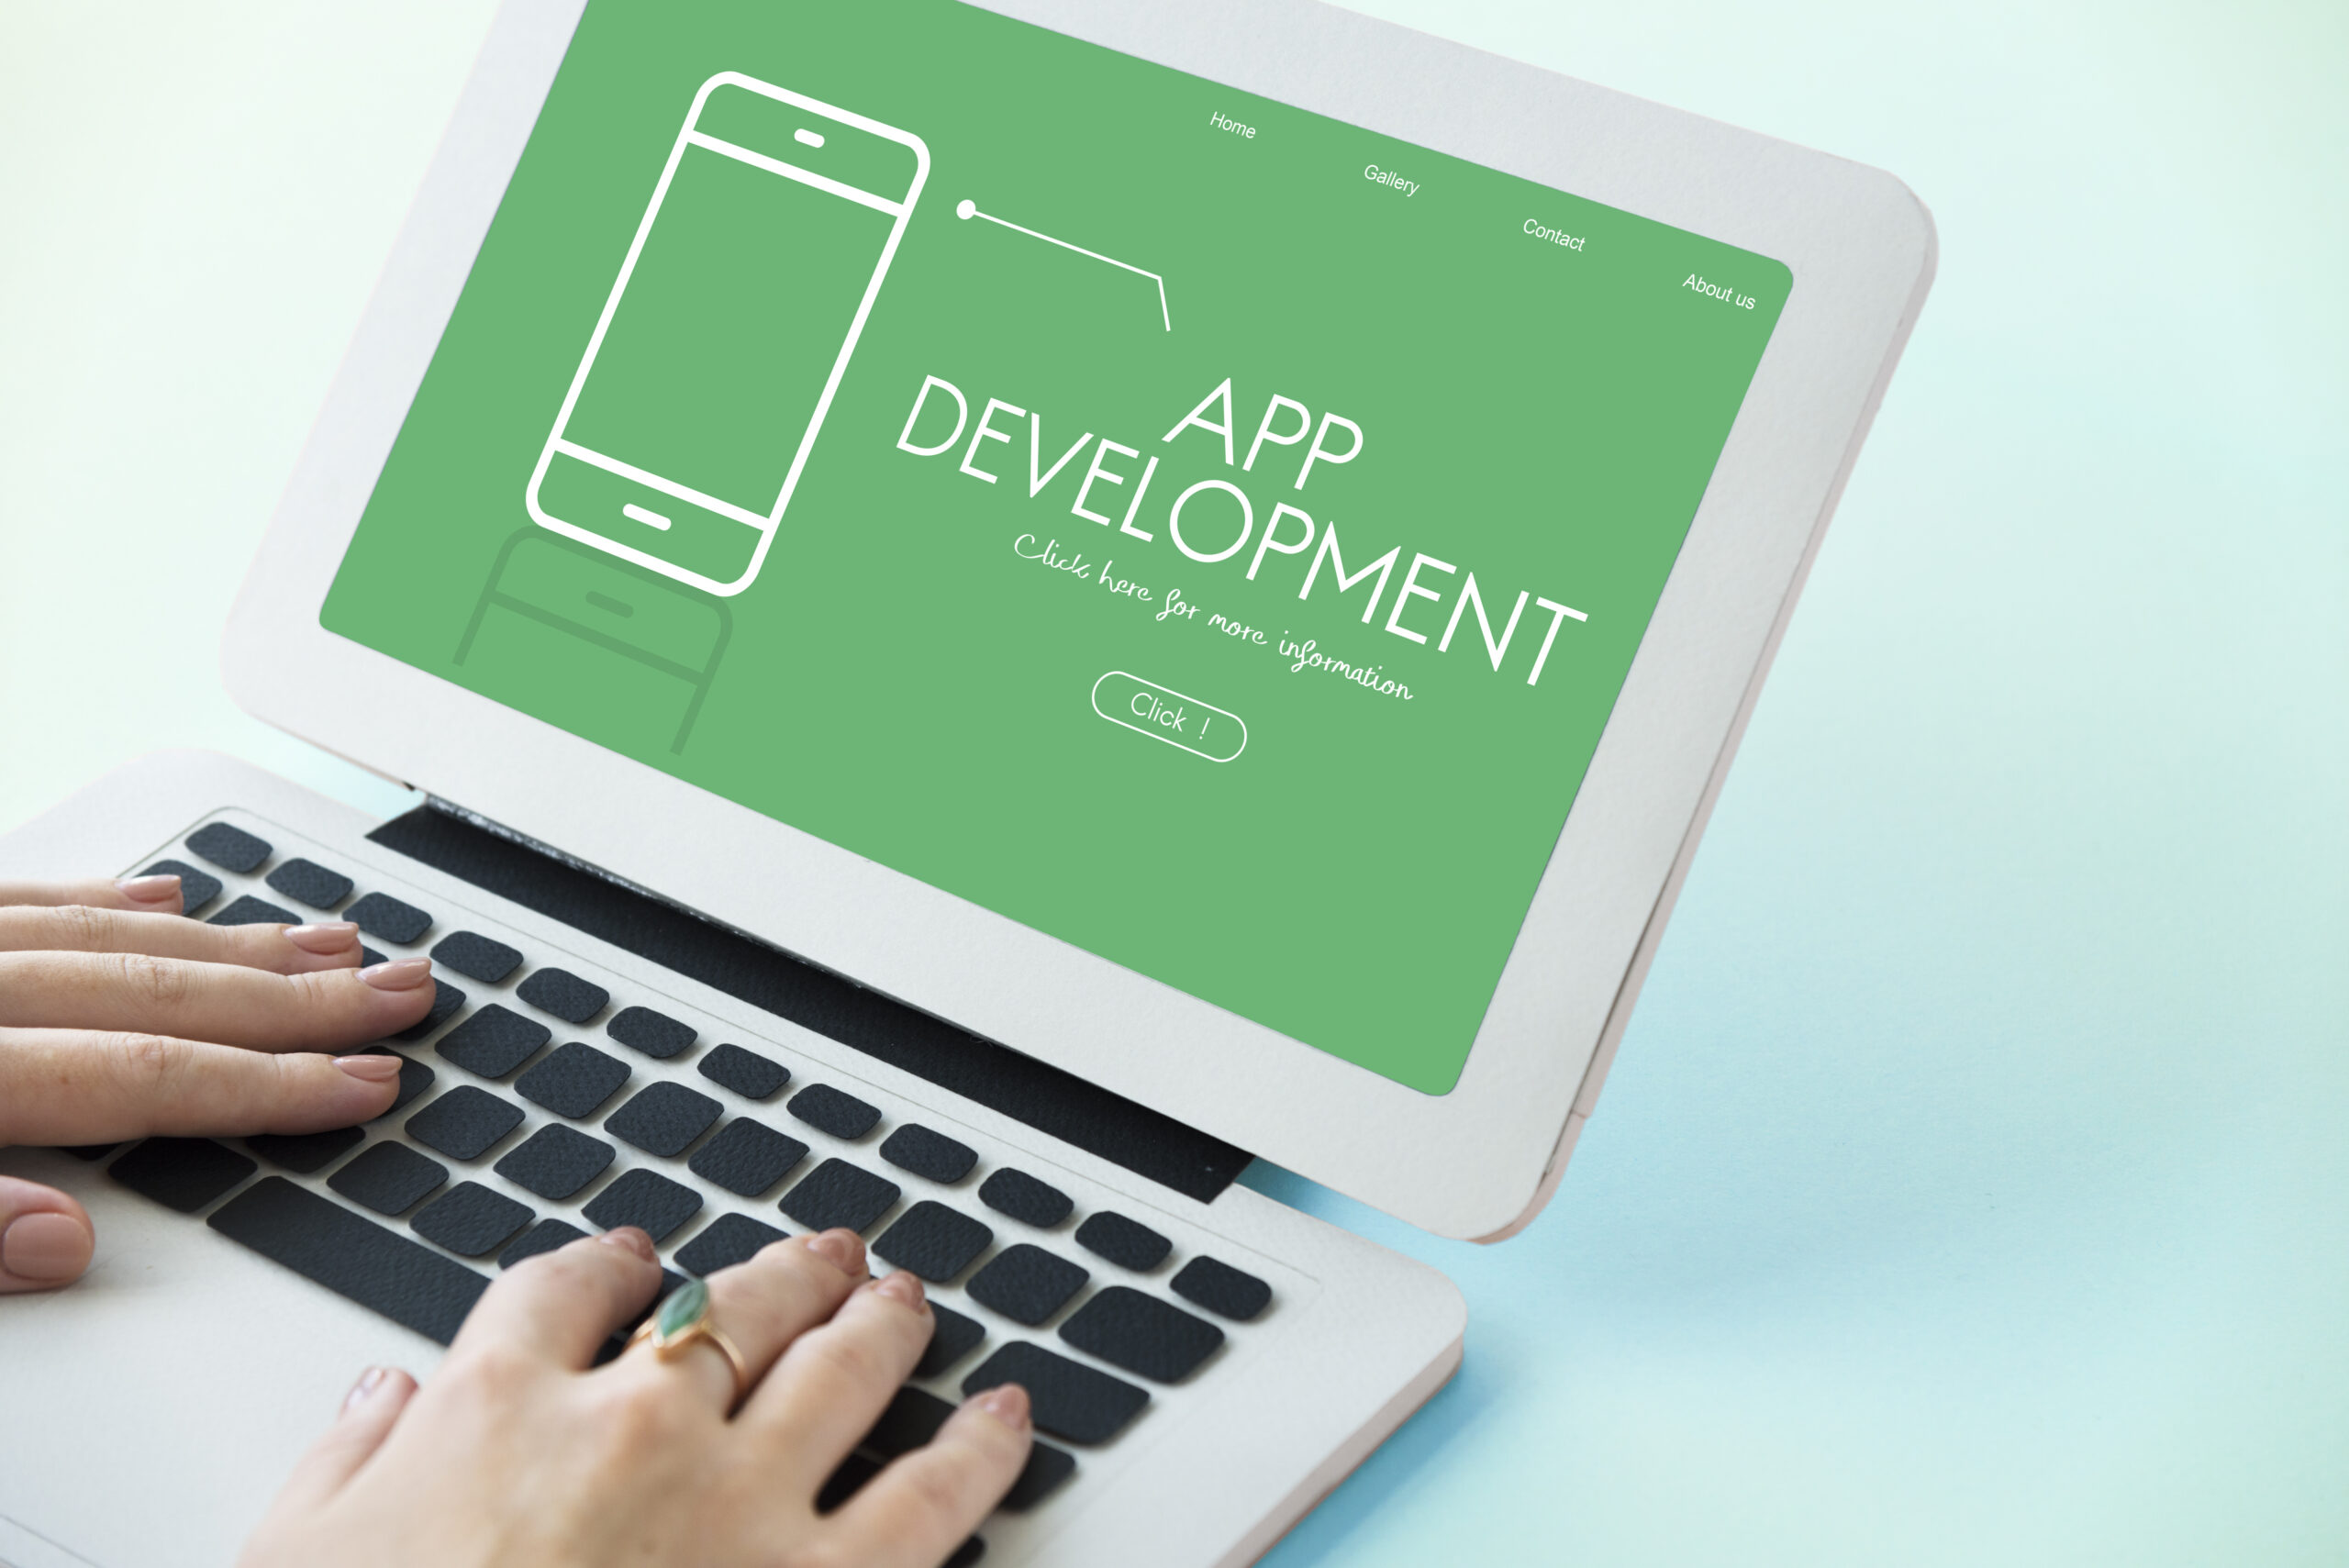 Technology App Development Wireless E-commerce